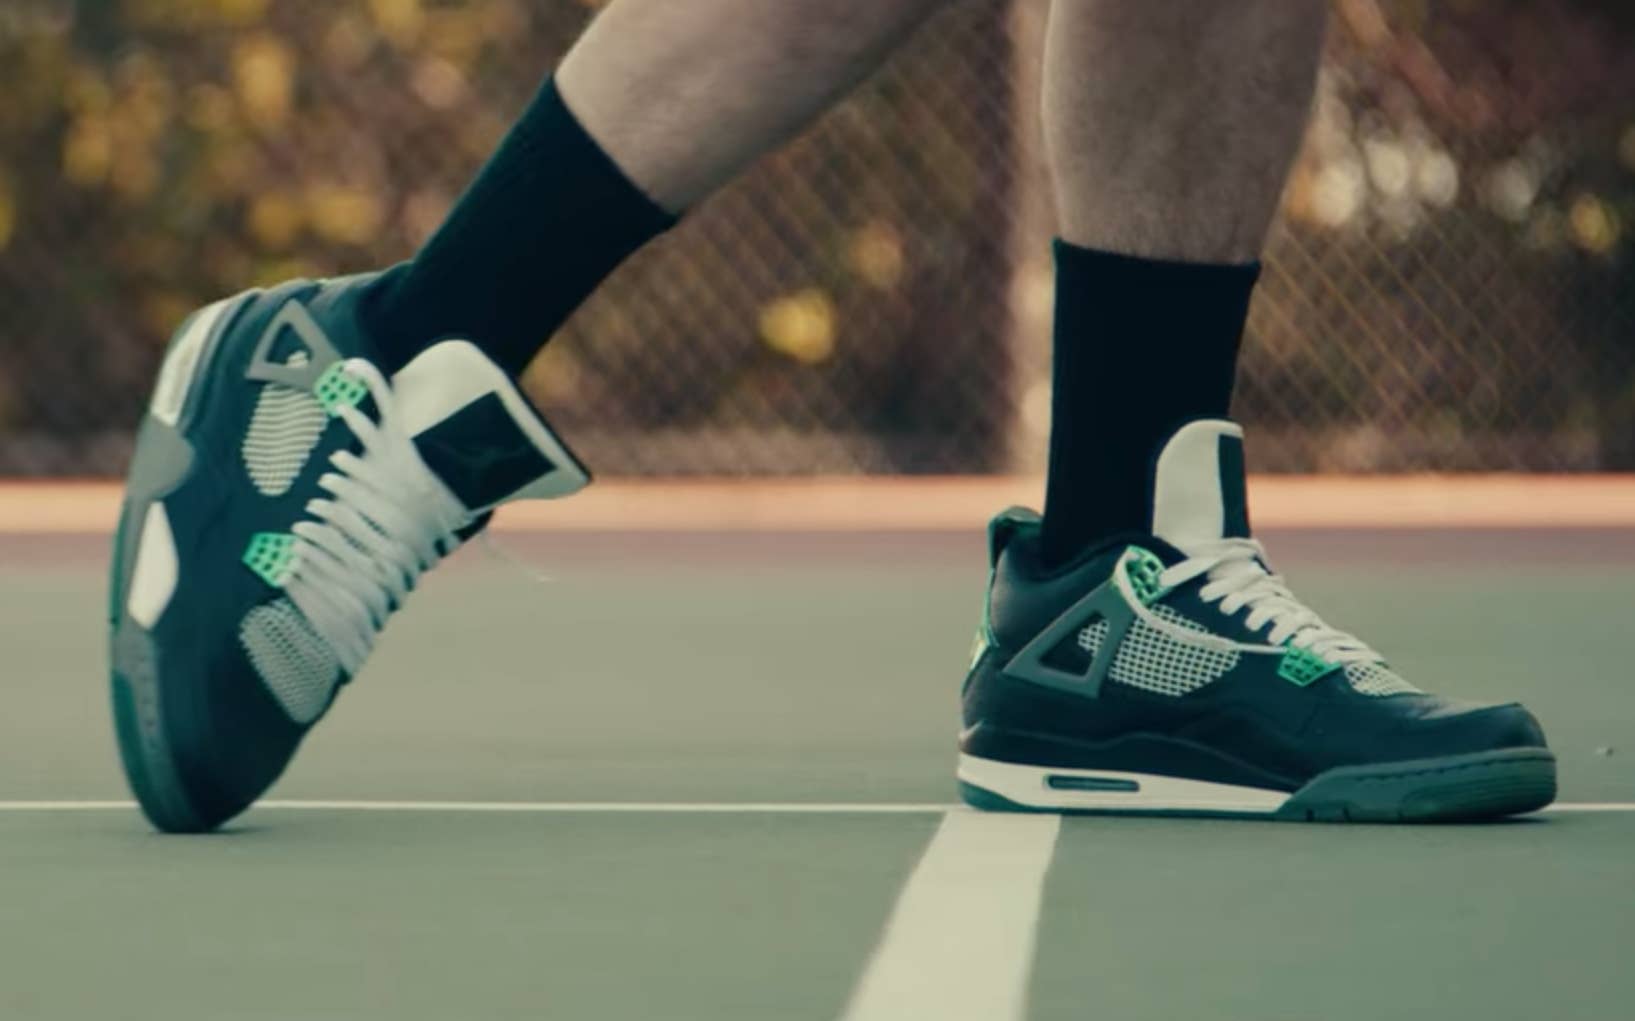 A pair of Oregon Air Jordan 4s gets scuffed in the Netflix show Sneakerheads